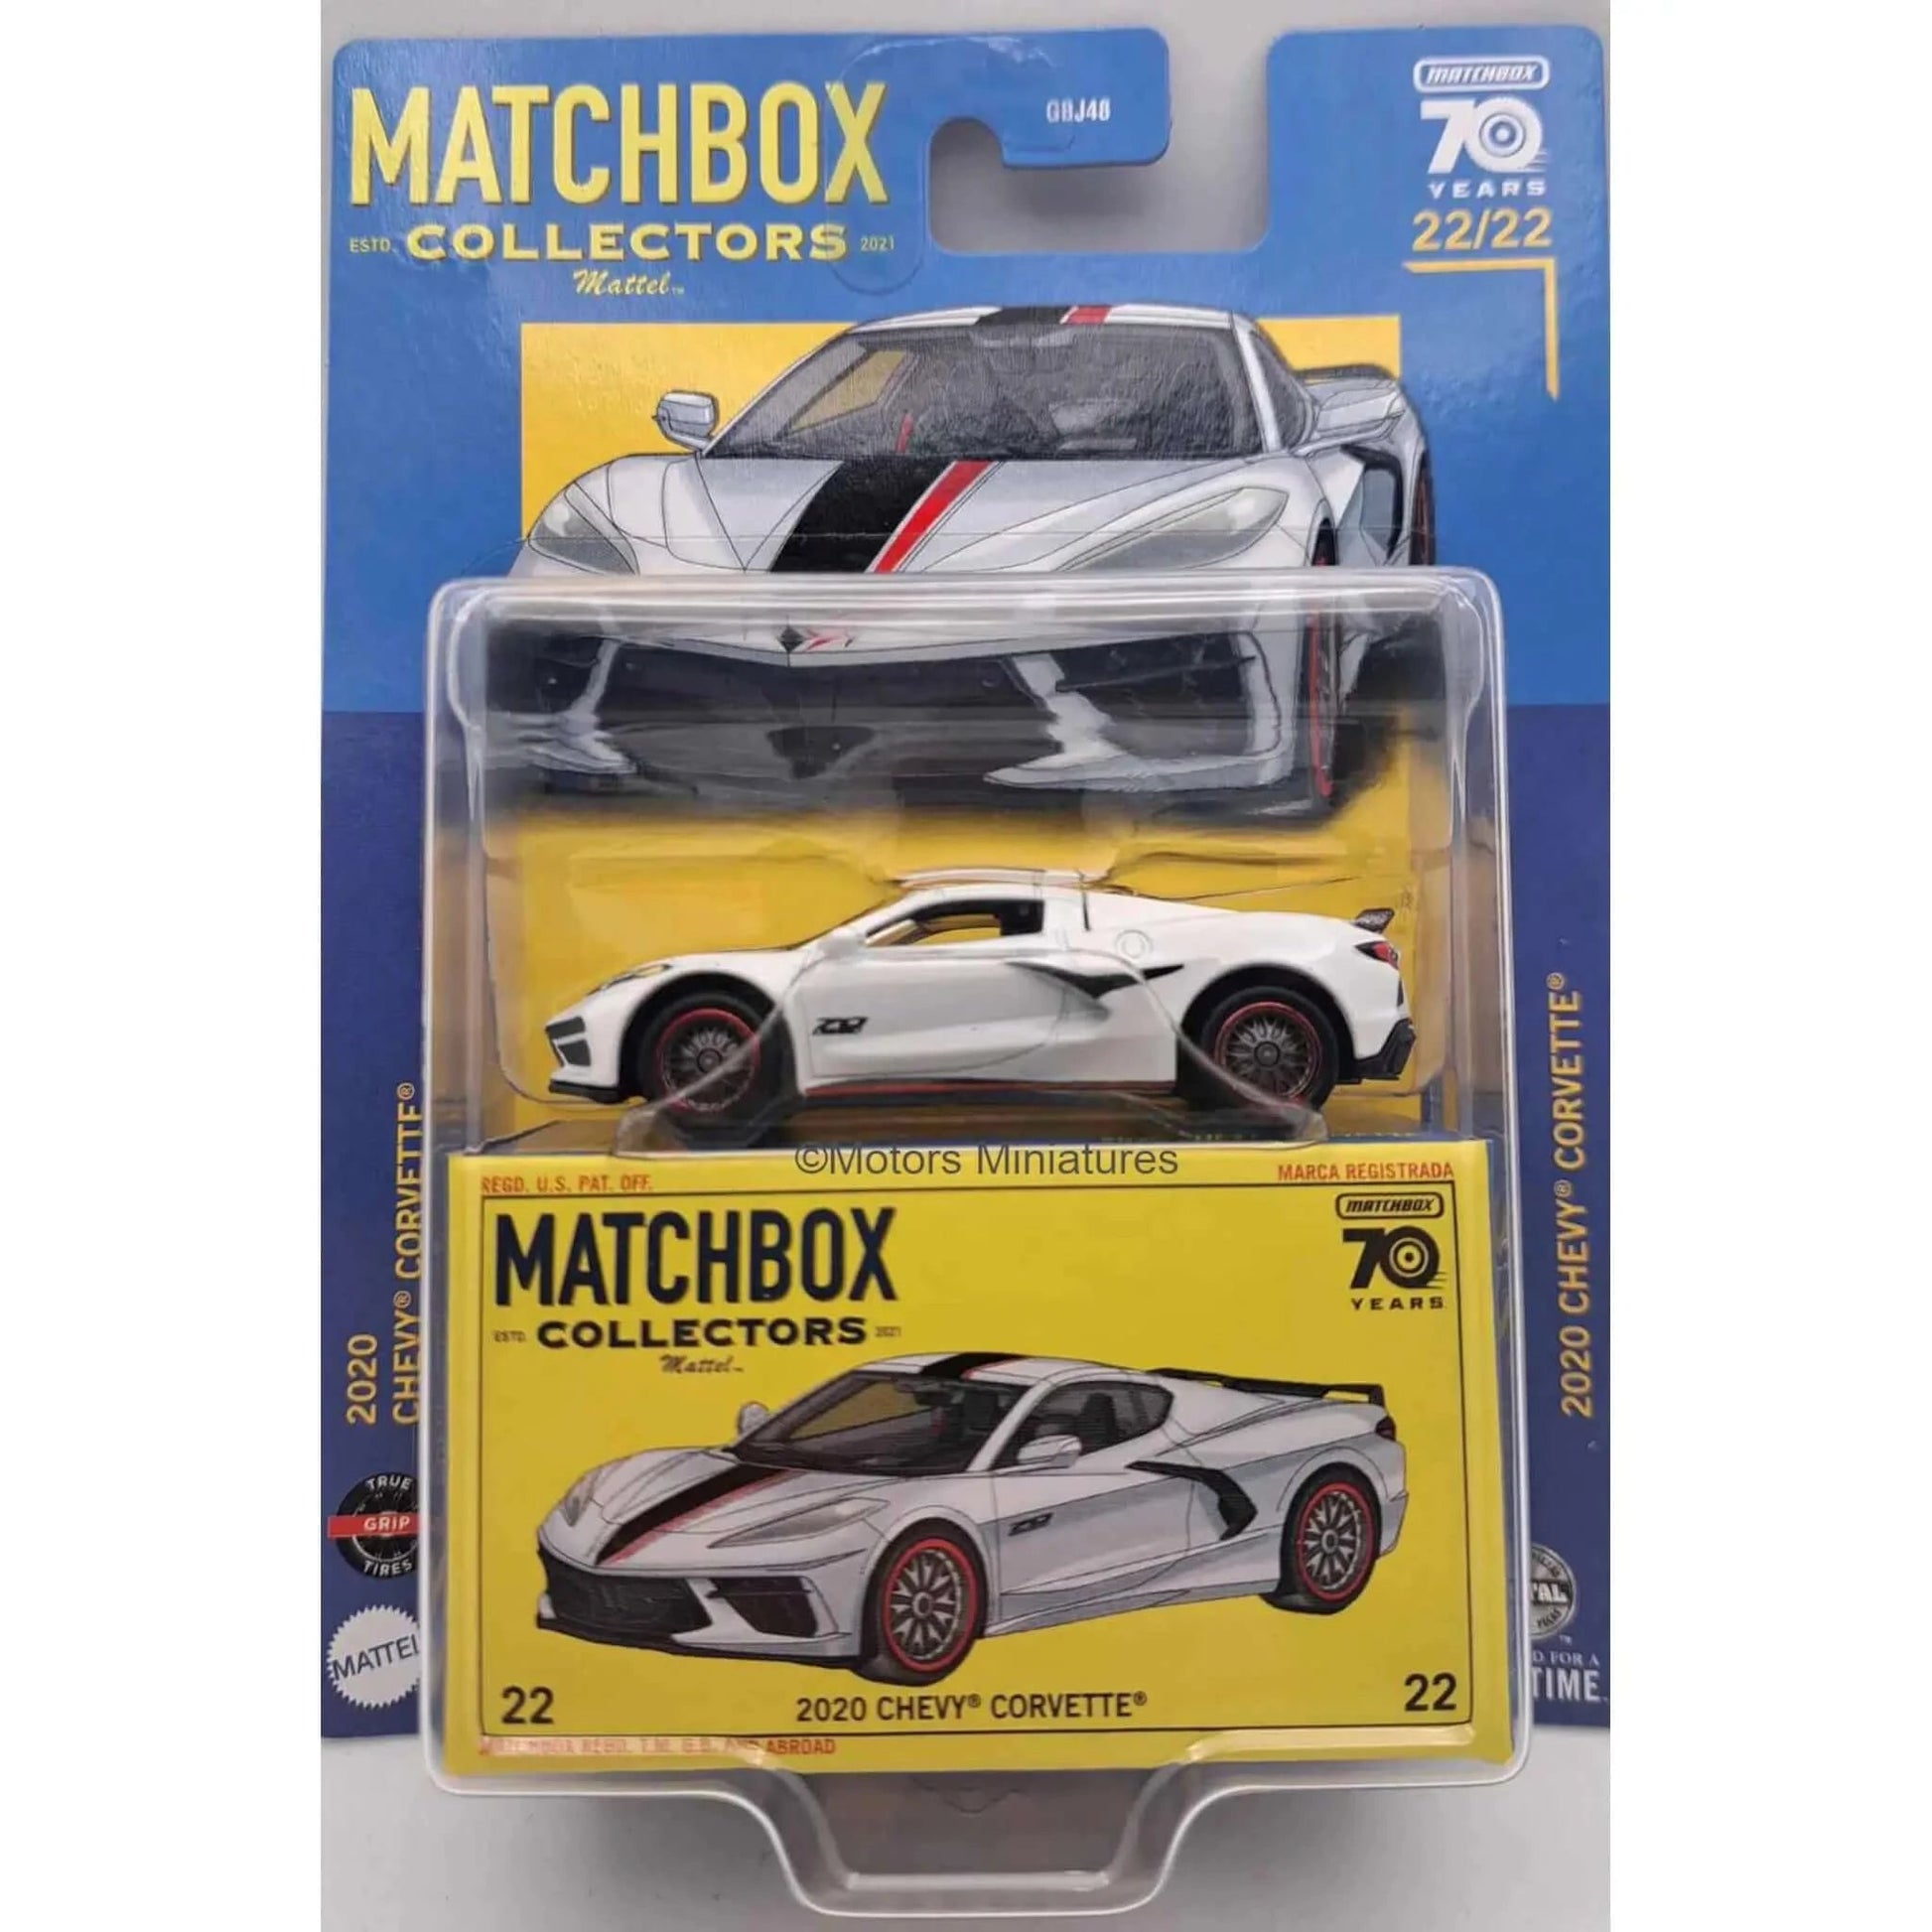 Chevy Corvette 2020 Matchbox 1/64 - MBGBJ48-965S-8